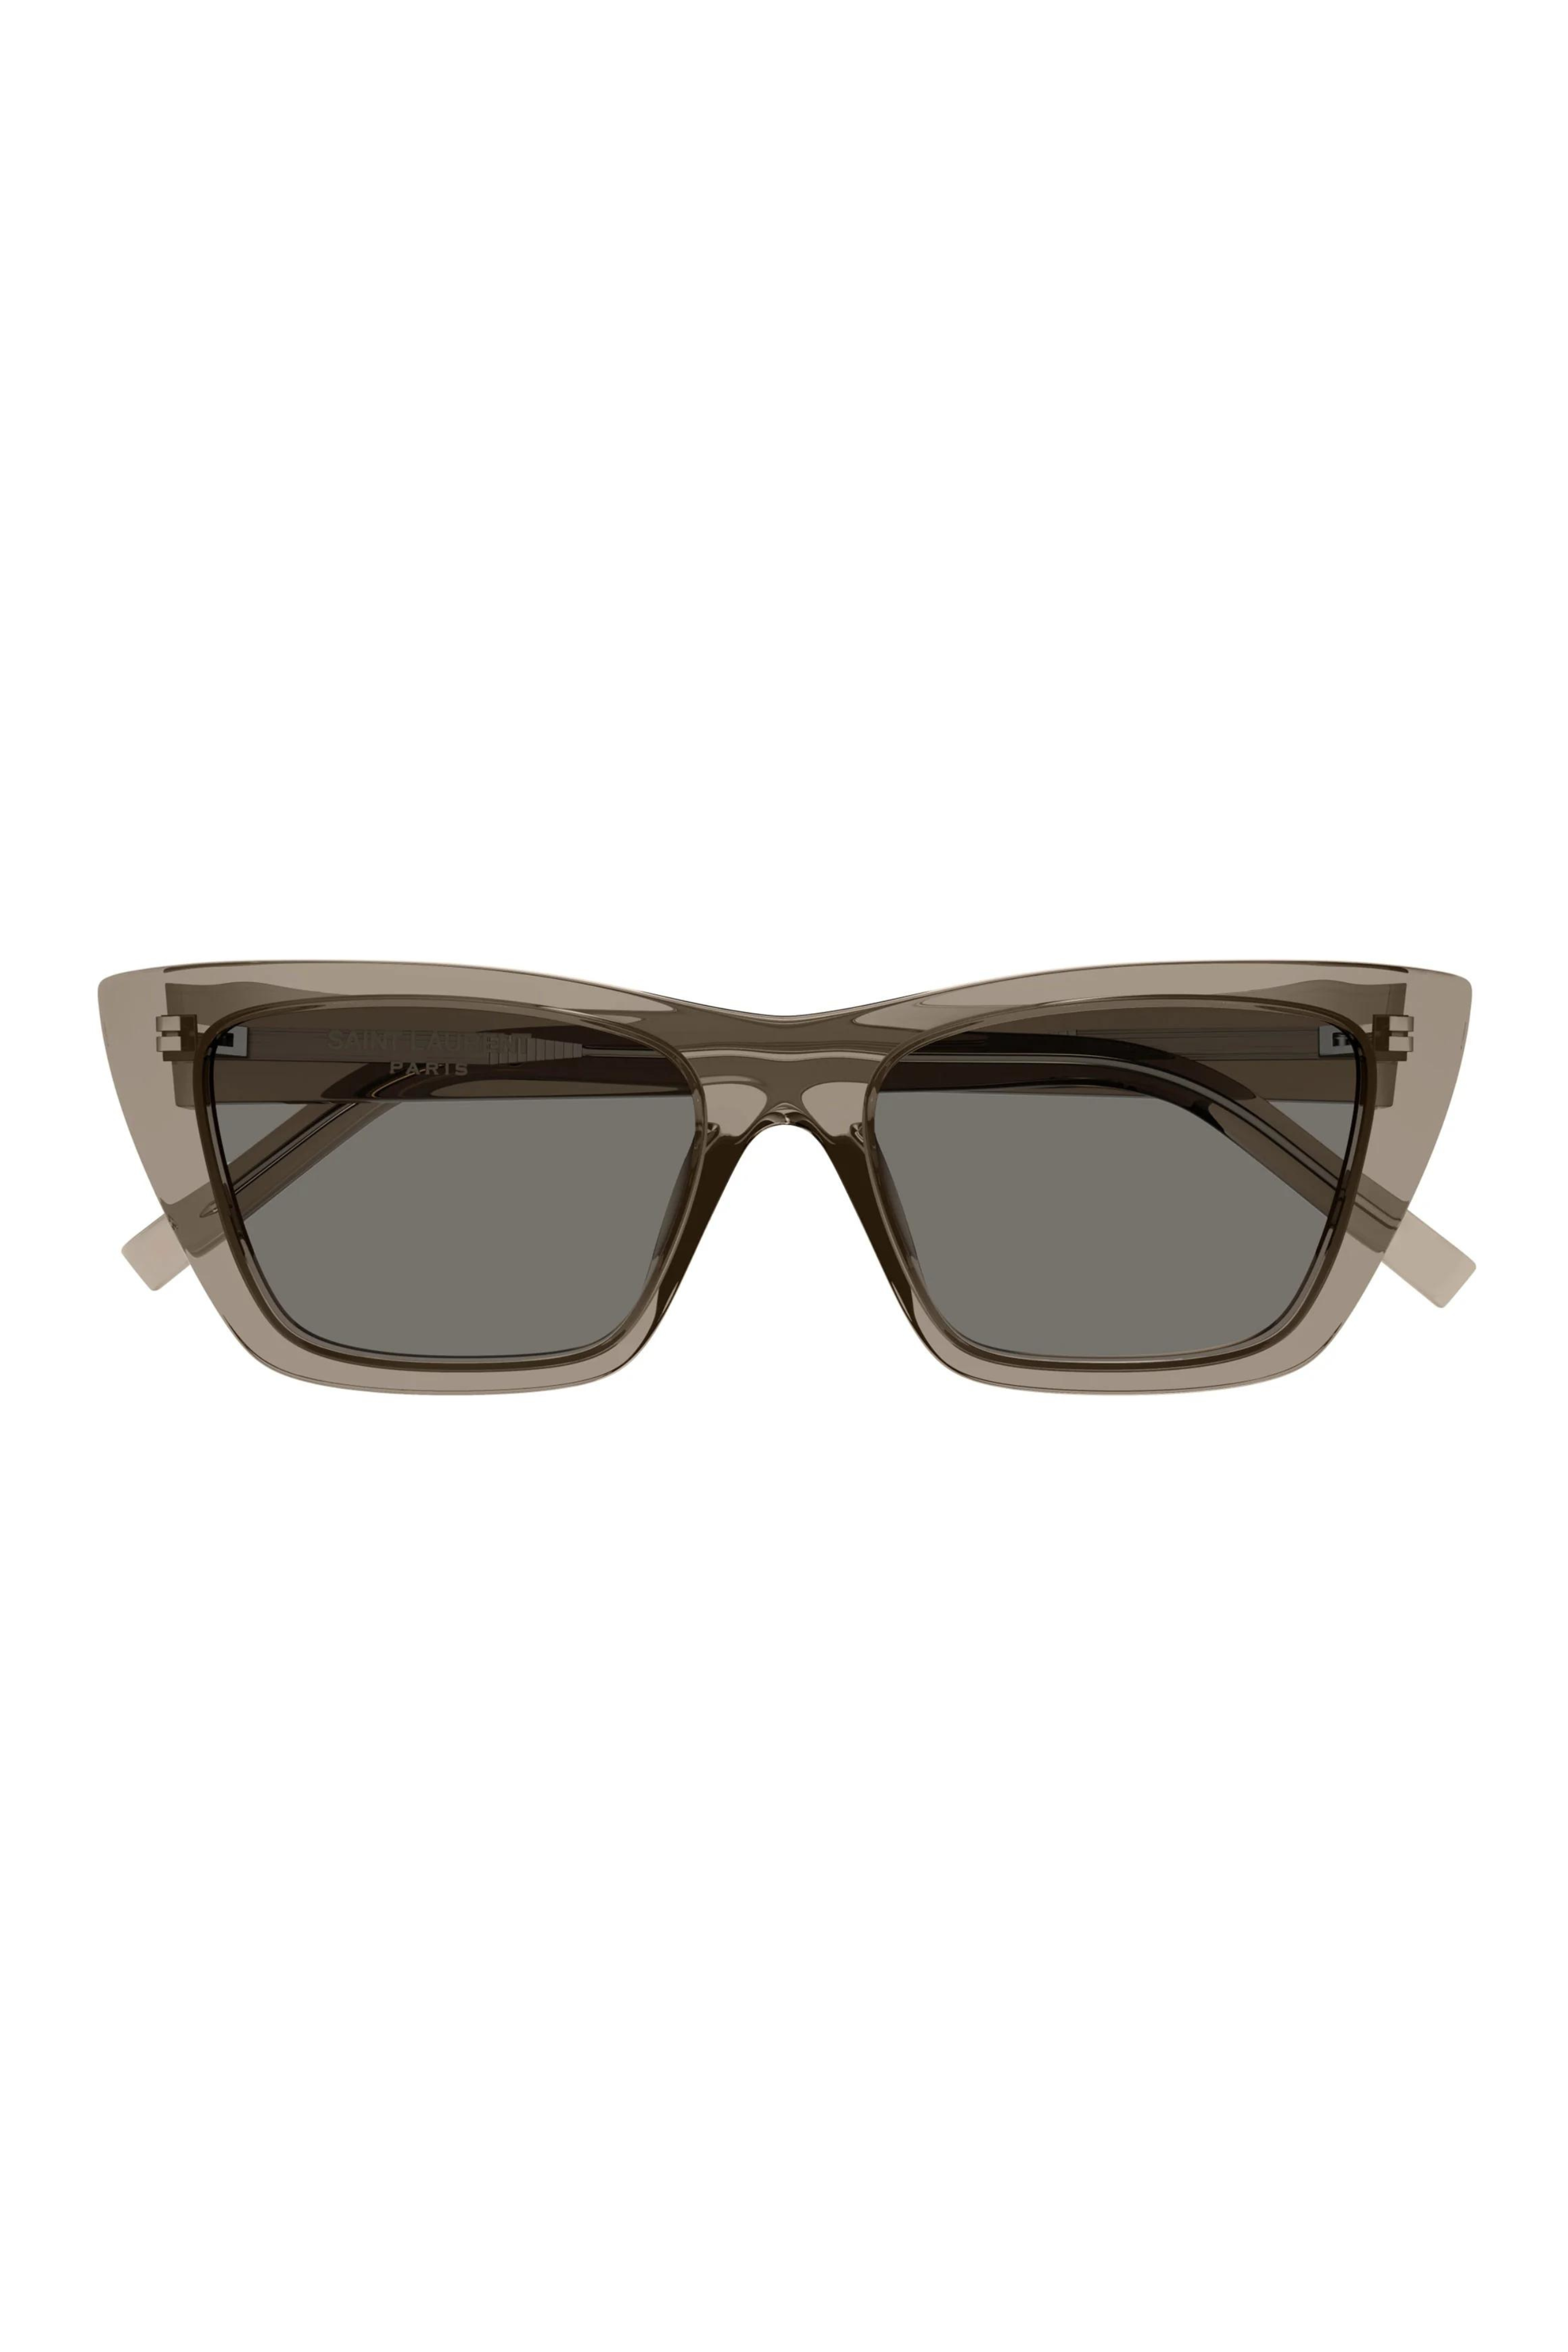 Saint Laurent Mica Sunglasses